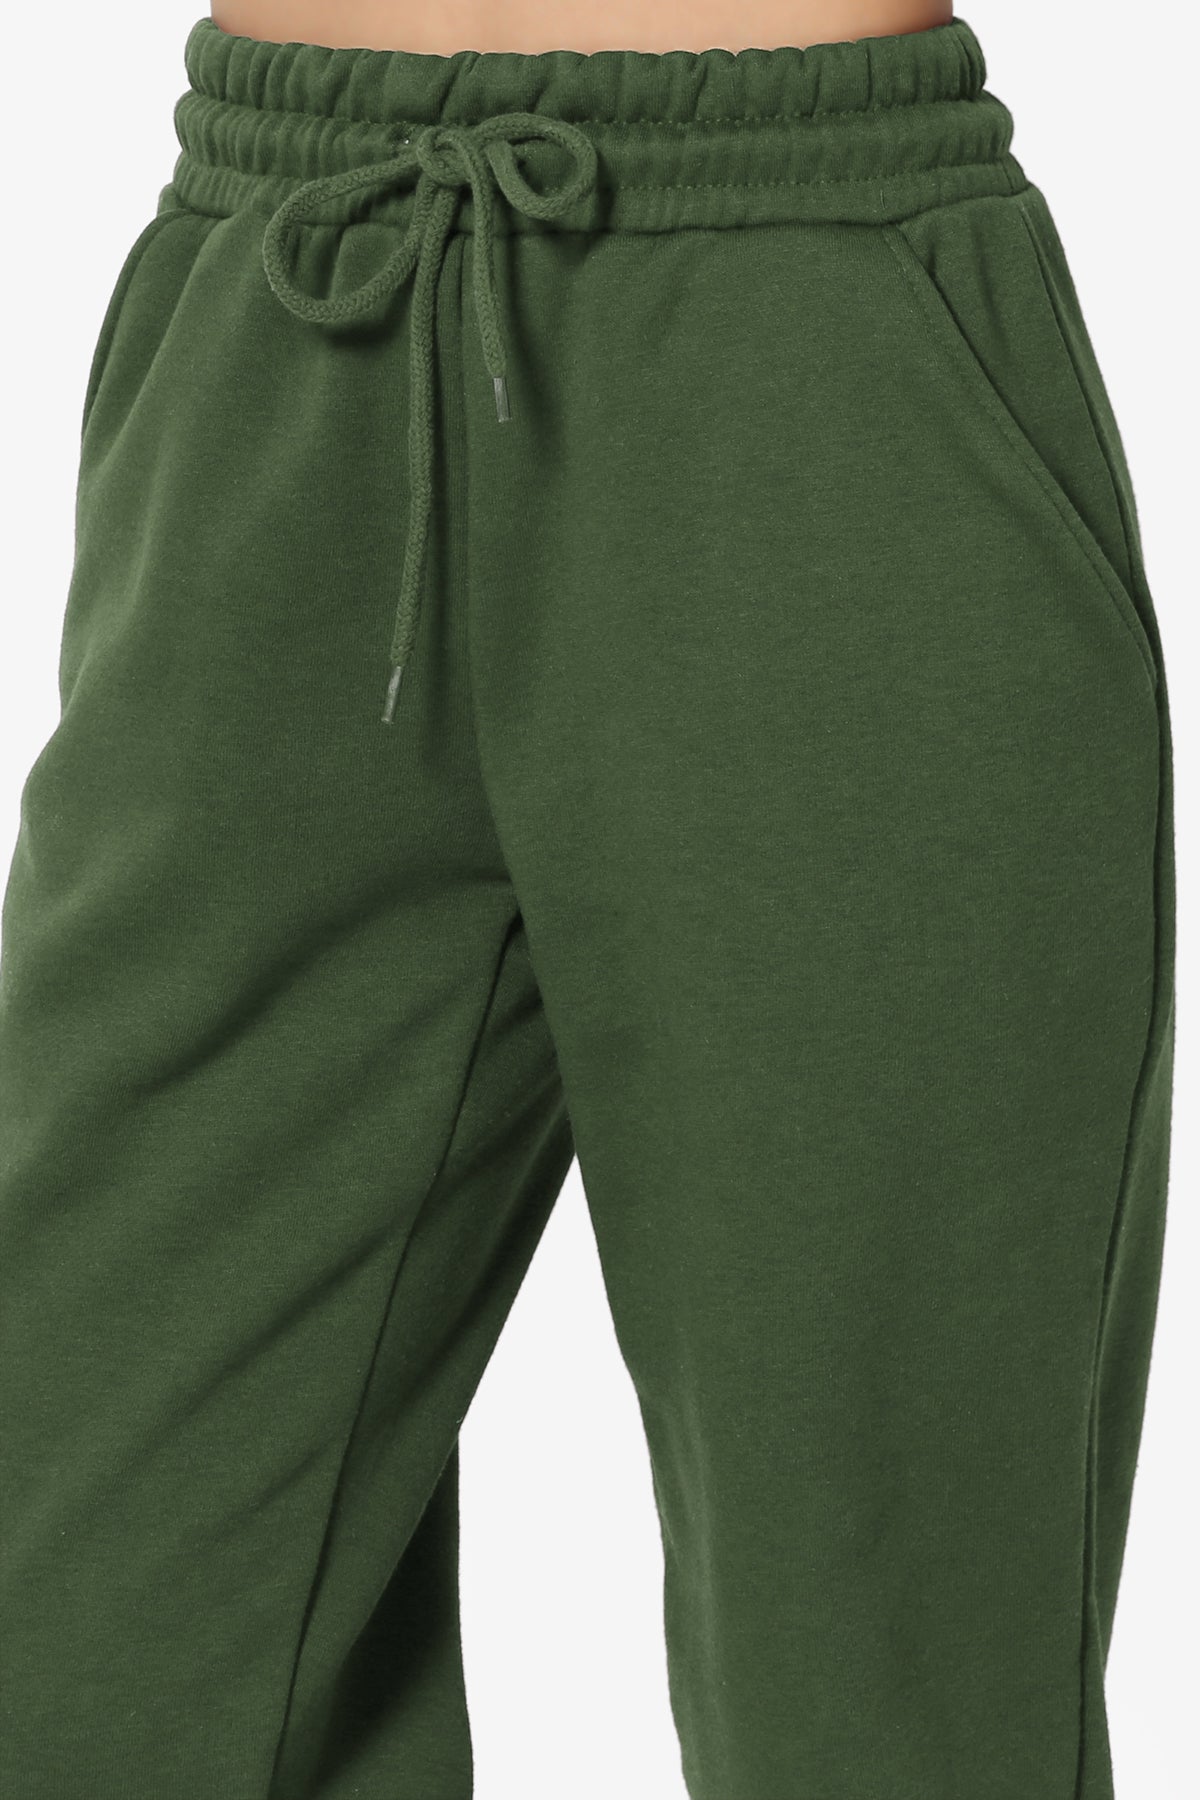 Mlqidk Yoga Pants for Women Capris Loose Soft Drawstring Workout Sweatpants  Causal Lounge Pants with Pockets,Green XXXXL